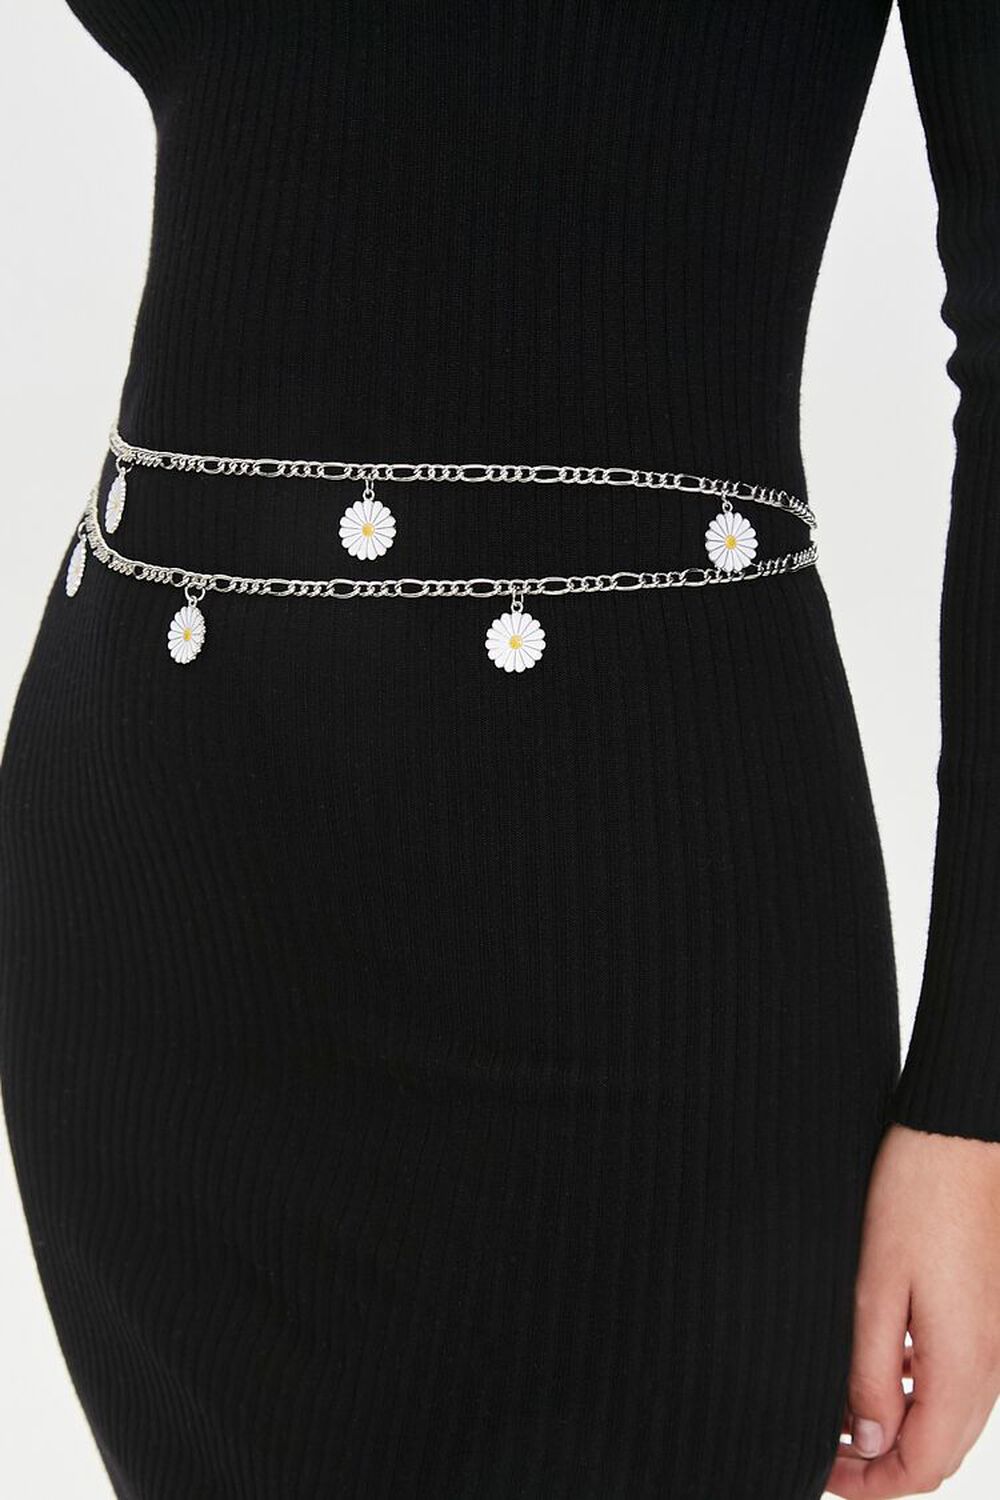 Daisy Charm Layered Hip Belt, image 2